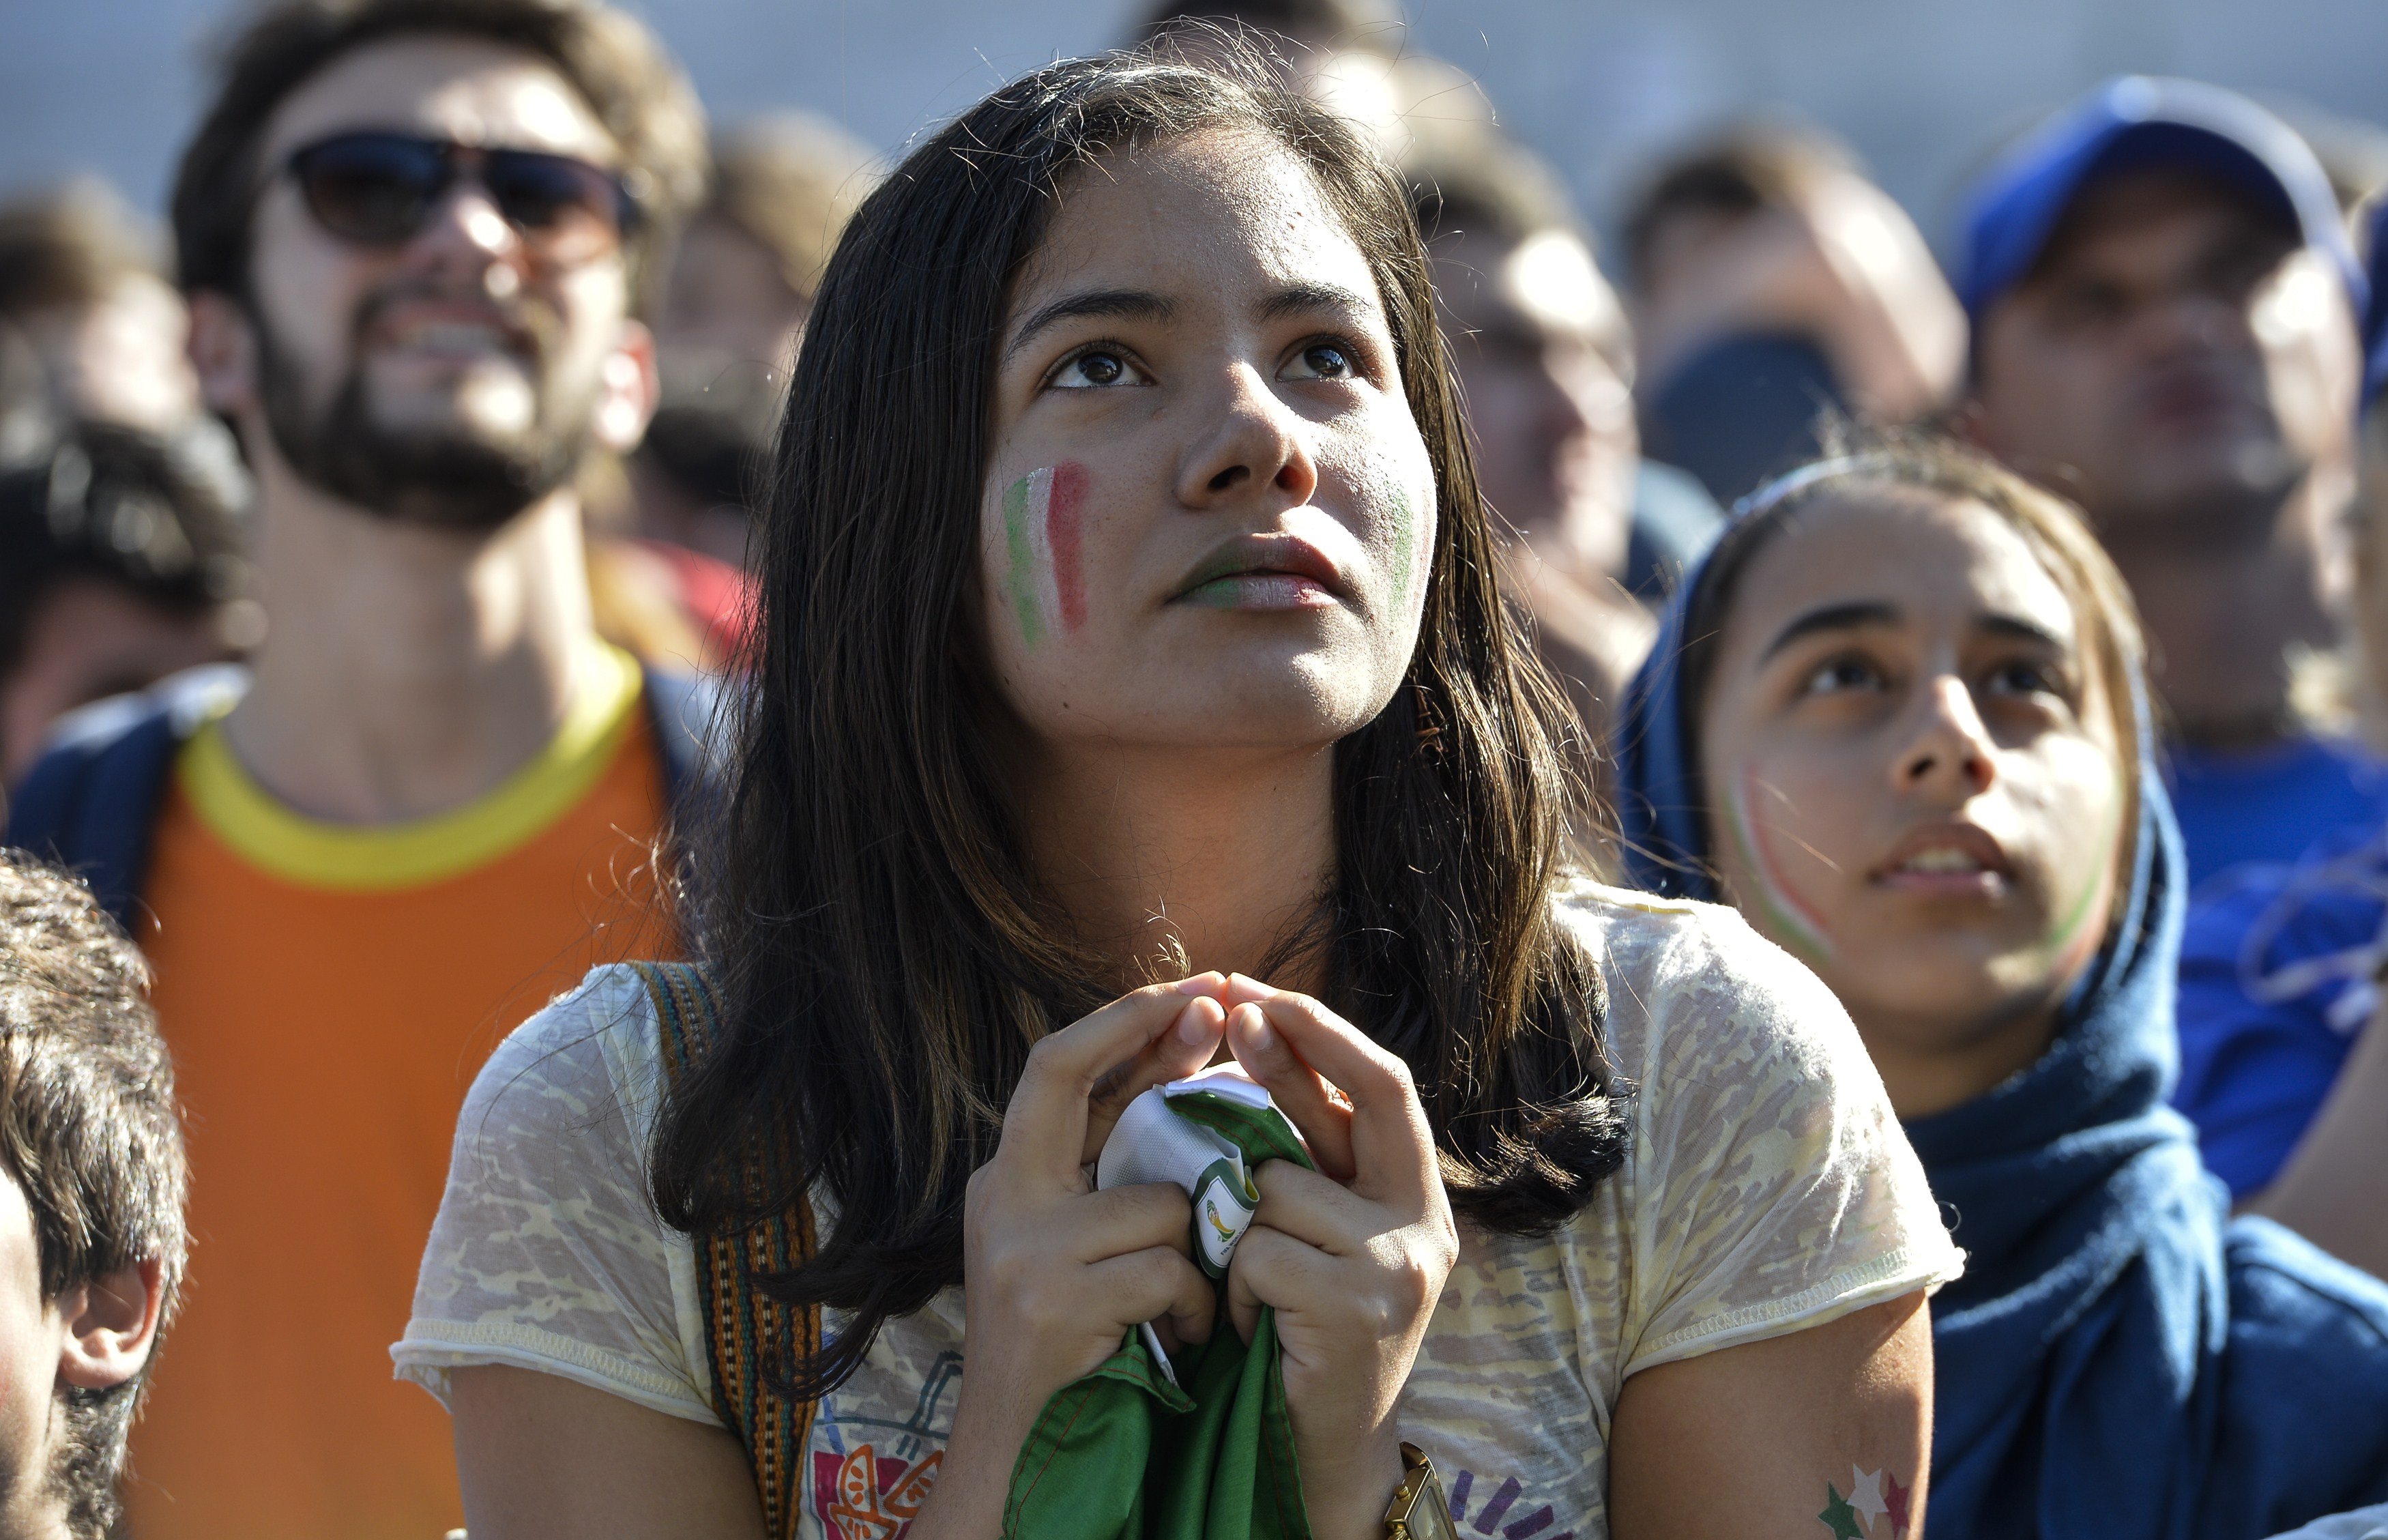 Italian fans watch Italy vs Costa Rica on June 20, 2014 on the Piazza Venezia square in Rome.